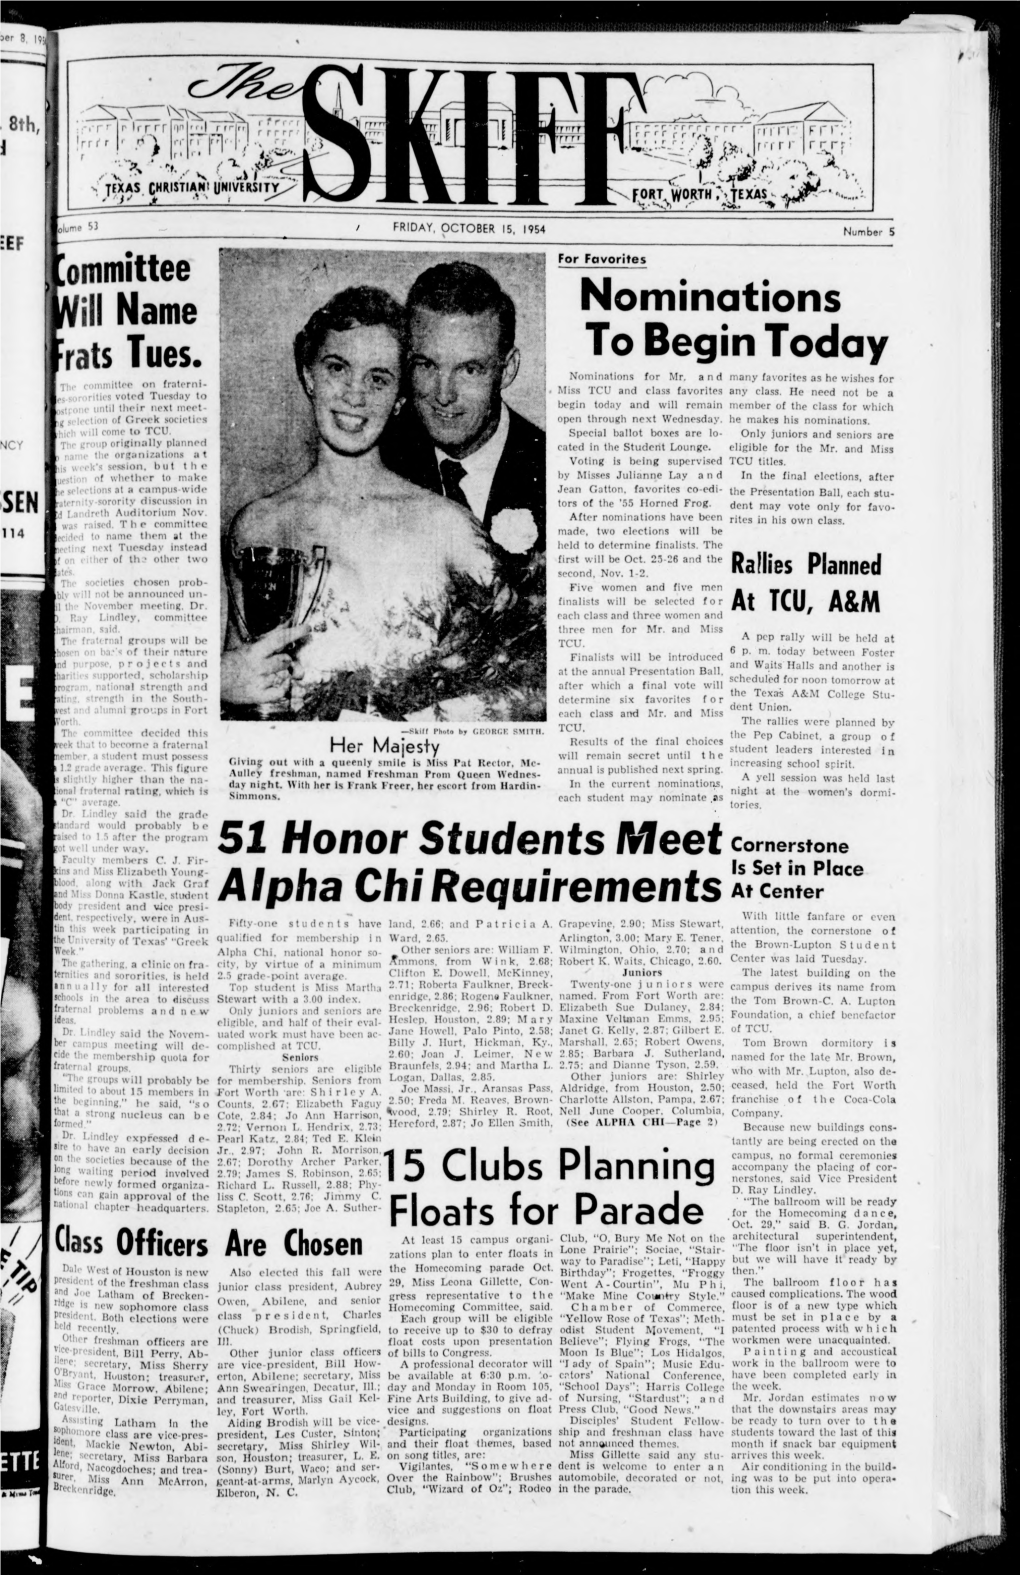 51 Honor Students Meet Alpha Chi Requirements